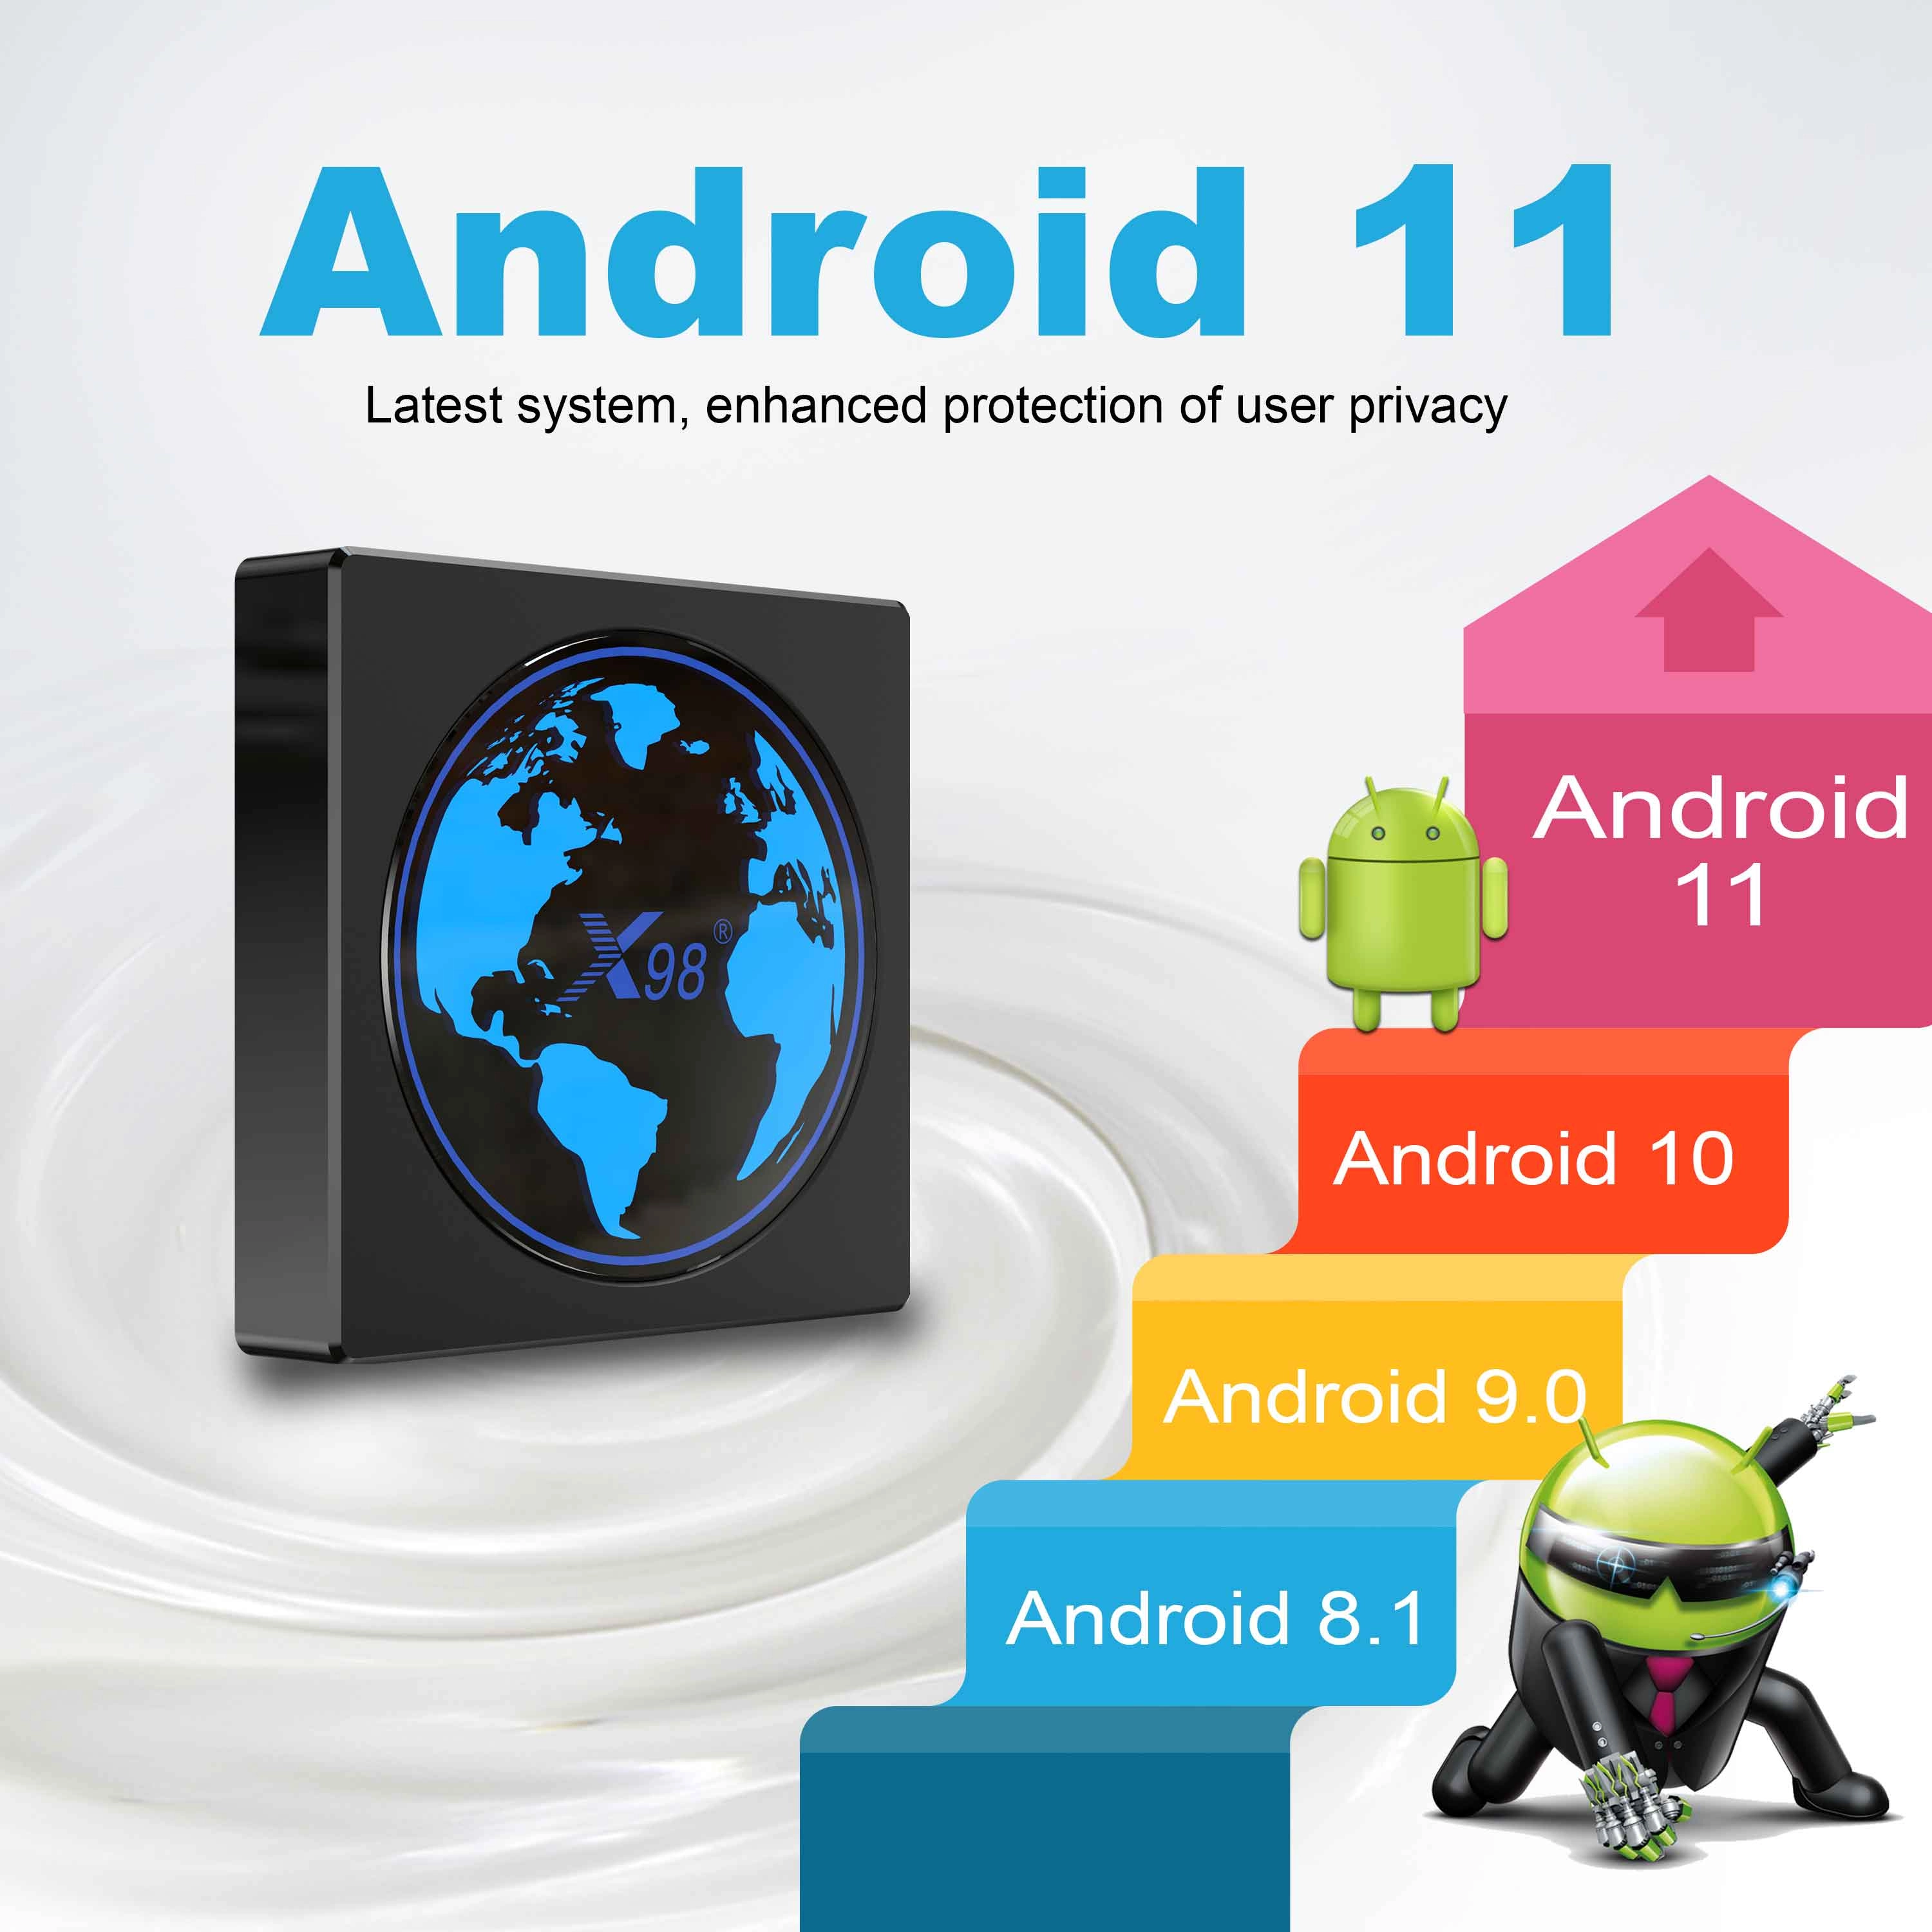 Android 11 TV box, Android TV box, Best Android 11 TV box, Android 11 TV box 2021, Android 11 TV box 4GB RAM 64GB ROM, Android 12 TV box